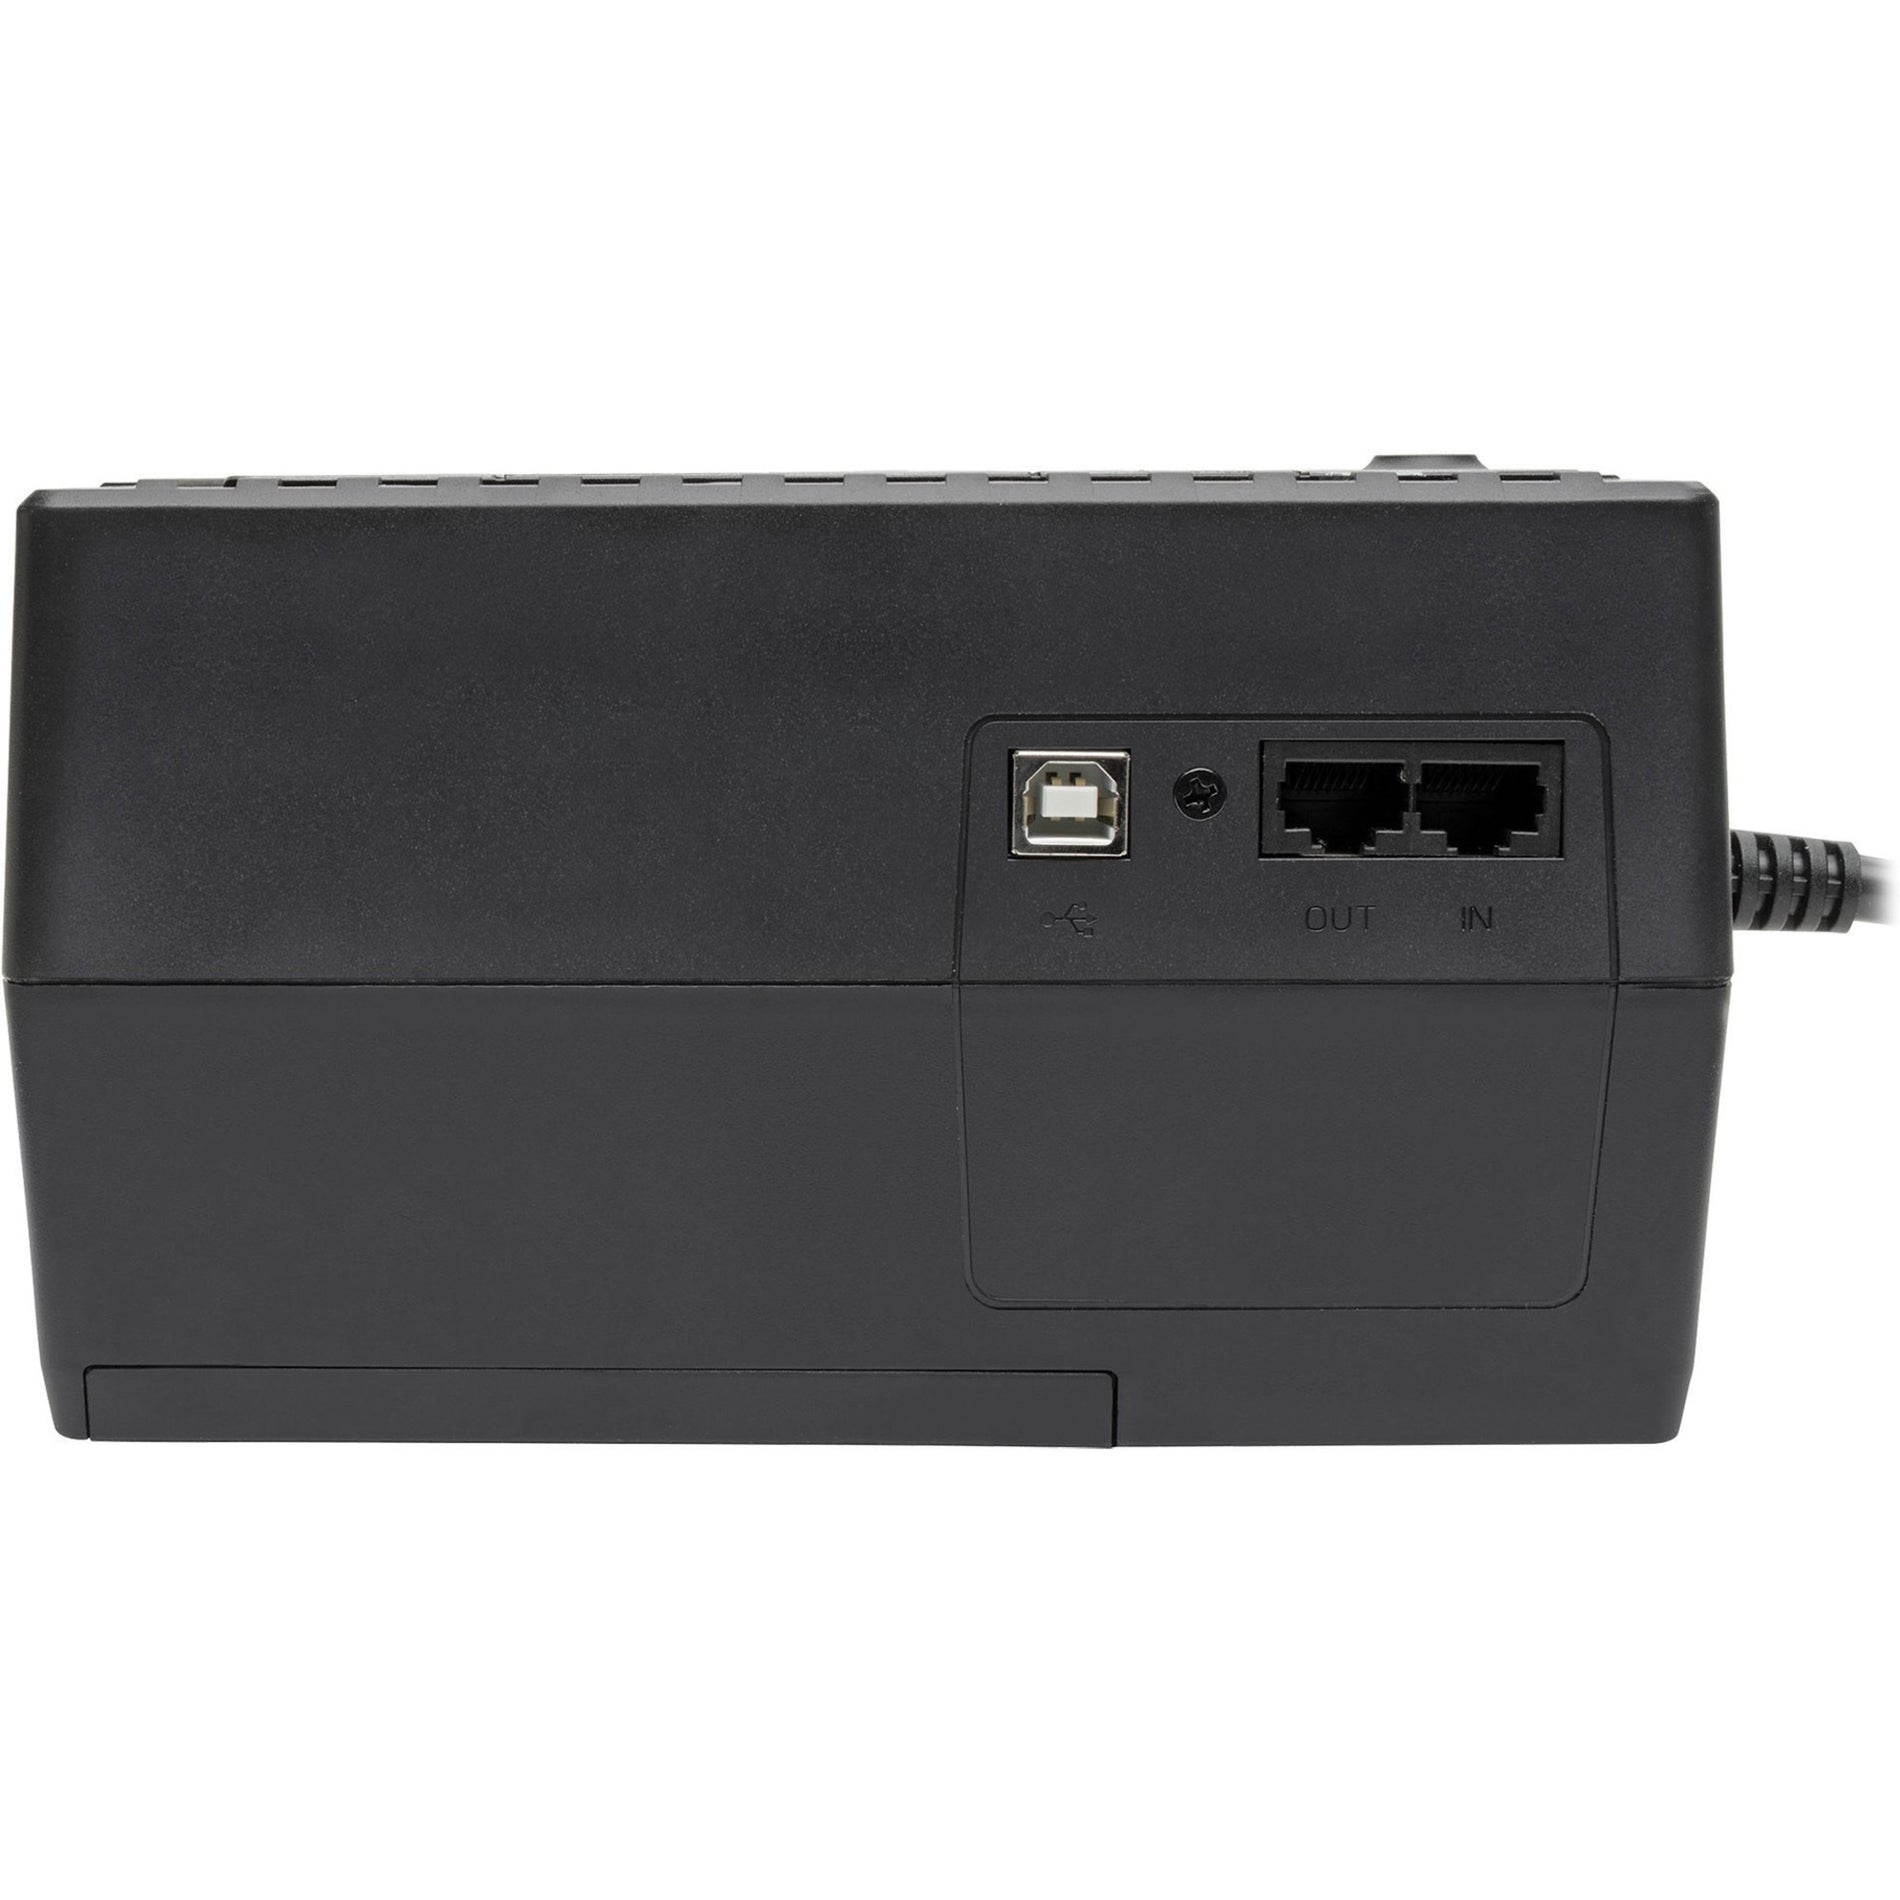 Tripp Lite UPS 550VA 300W Eco Green Battery Back Up Compact 120V USB RJ11 (ECO550UPS) Left image